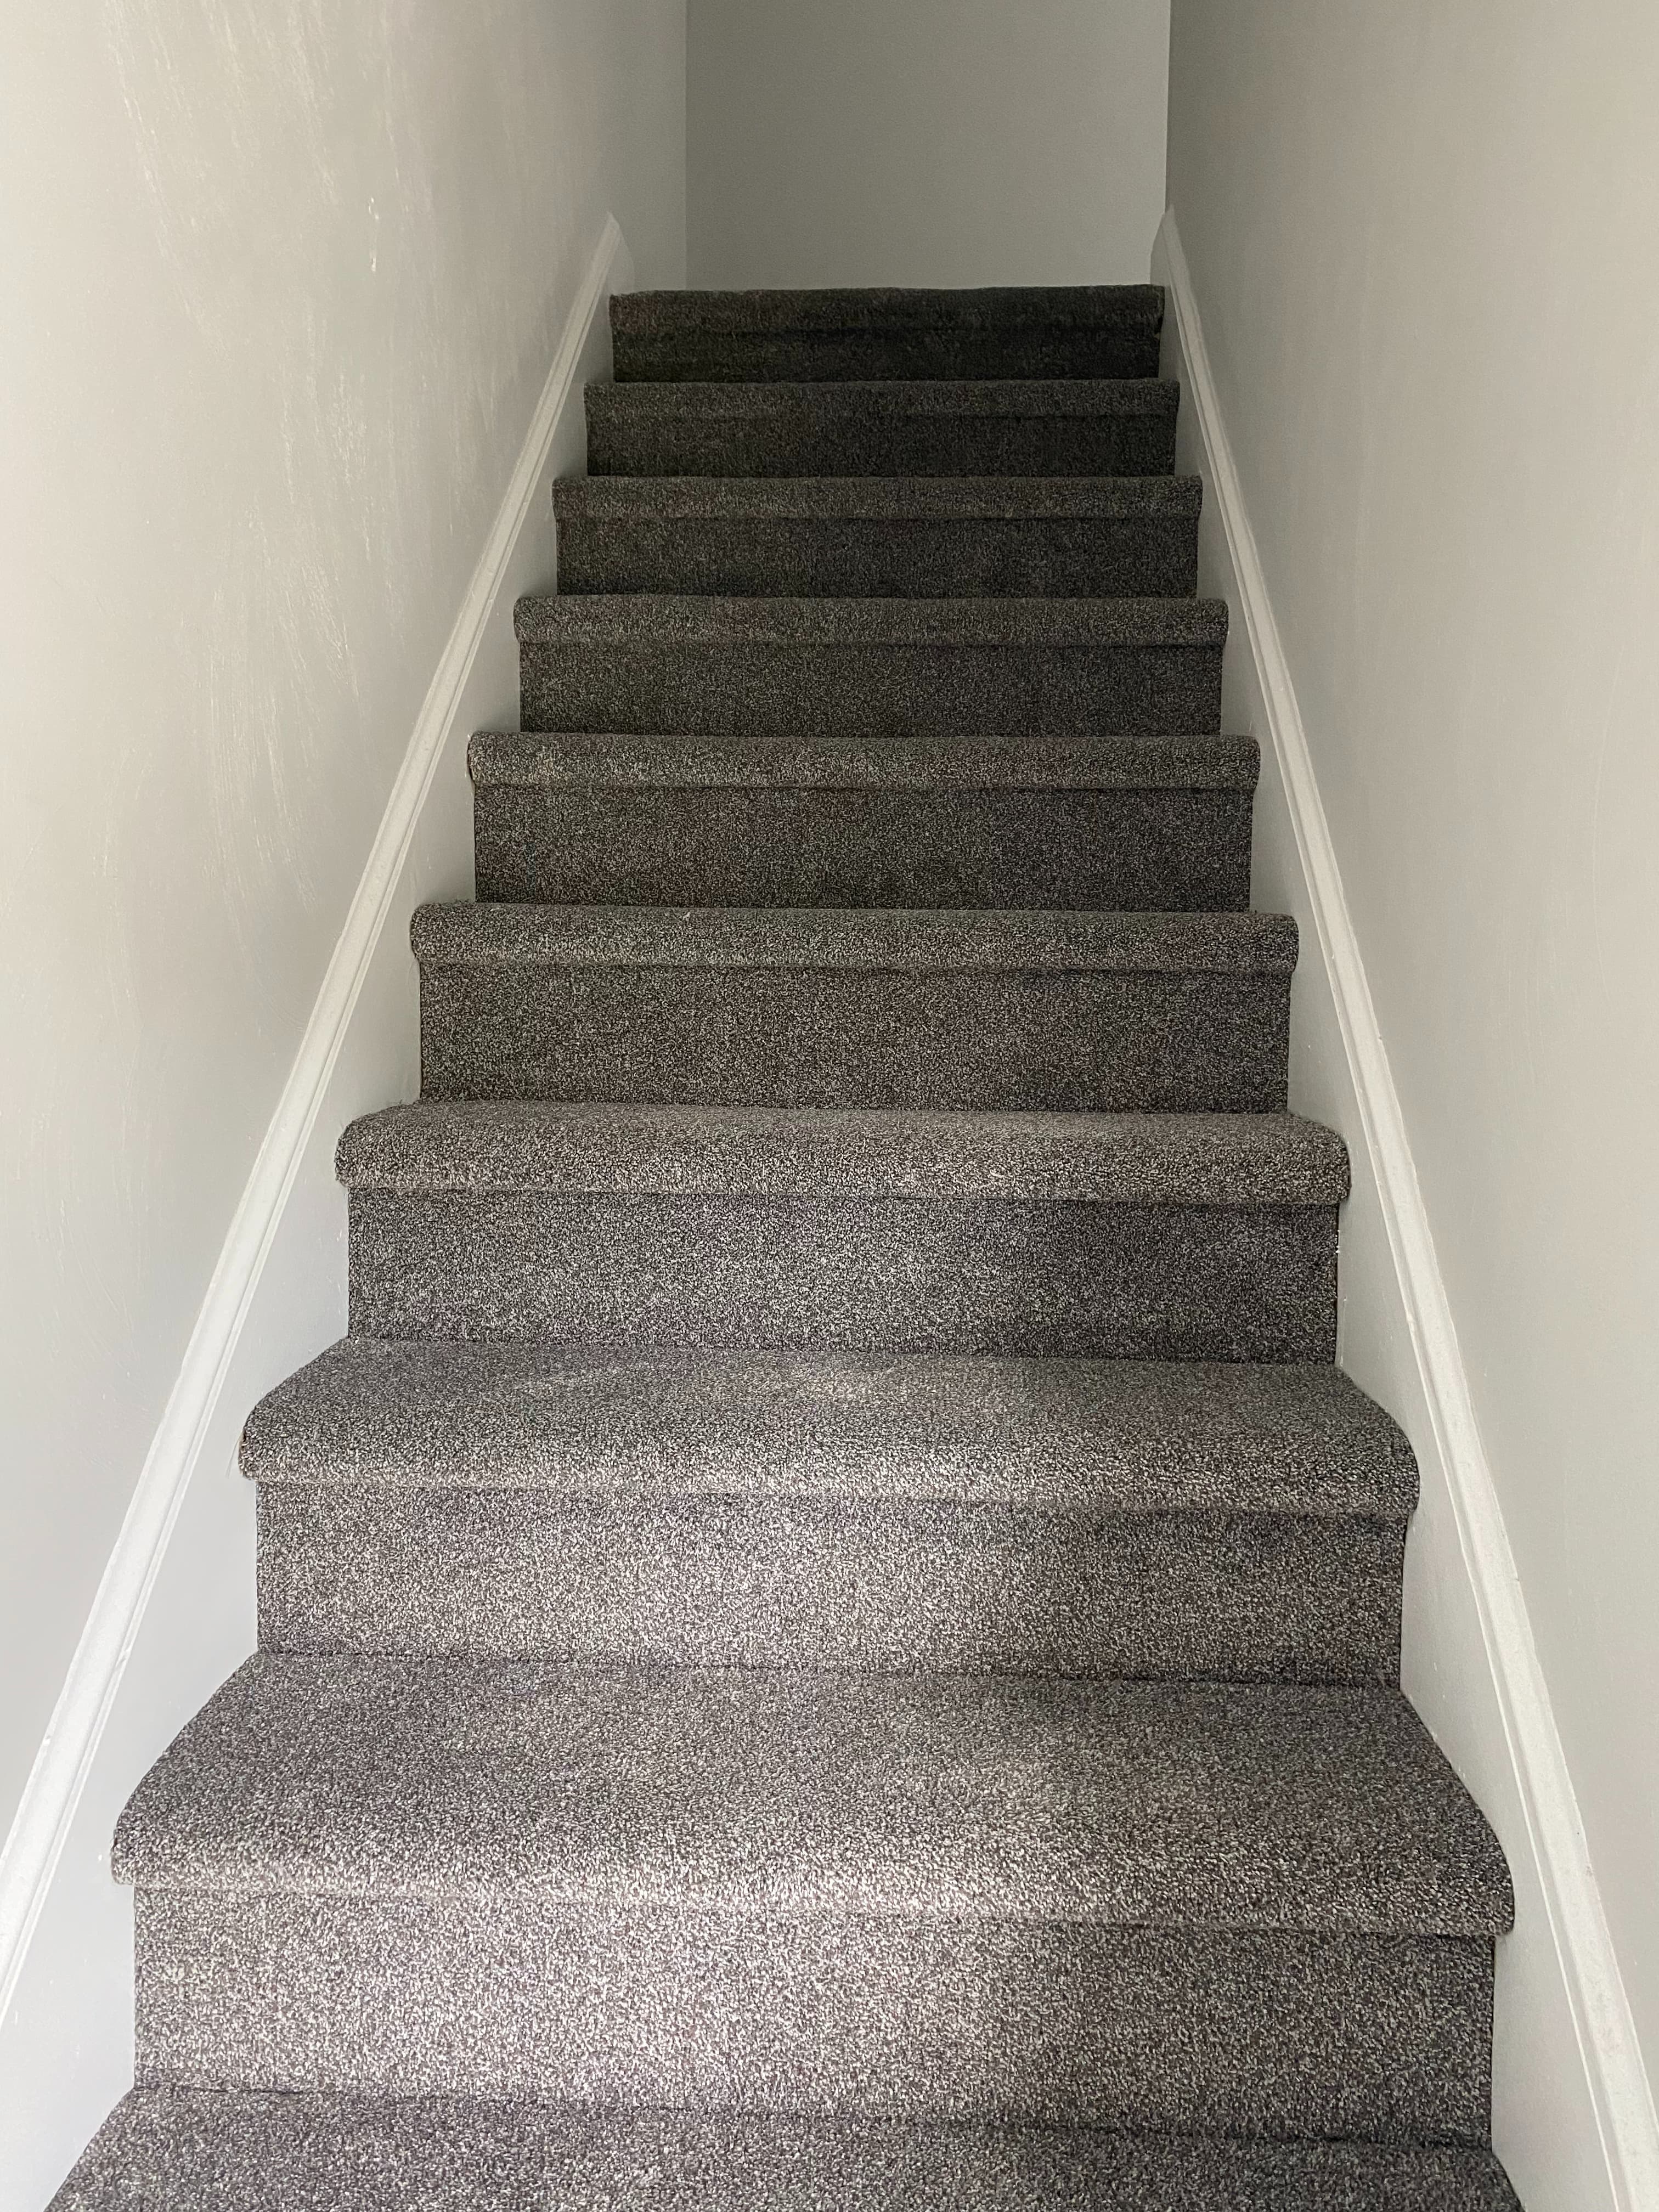 Stairs carpet flooring | Carpetland USA of Virginia